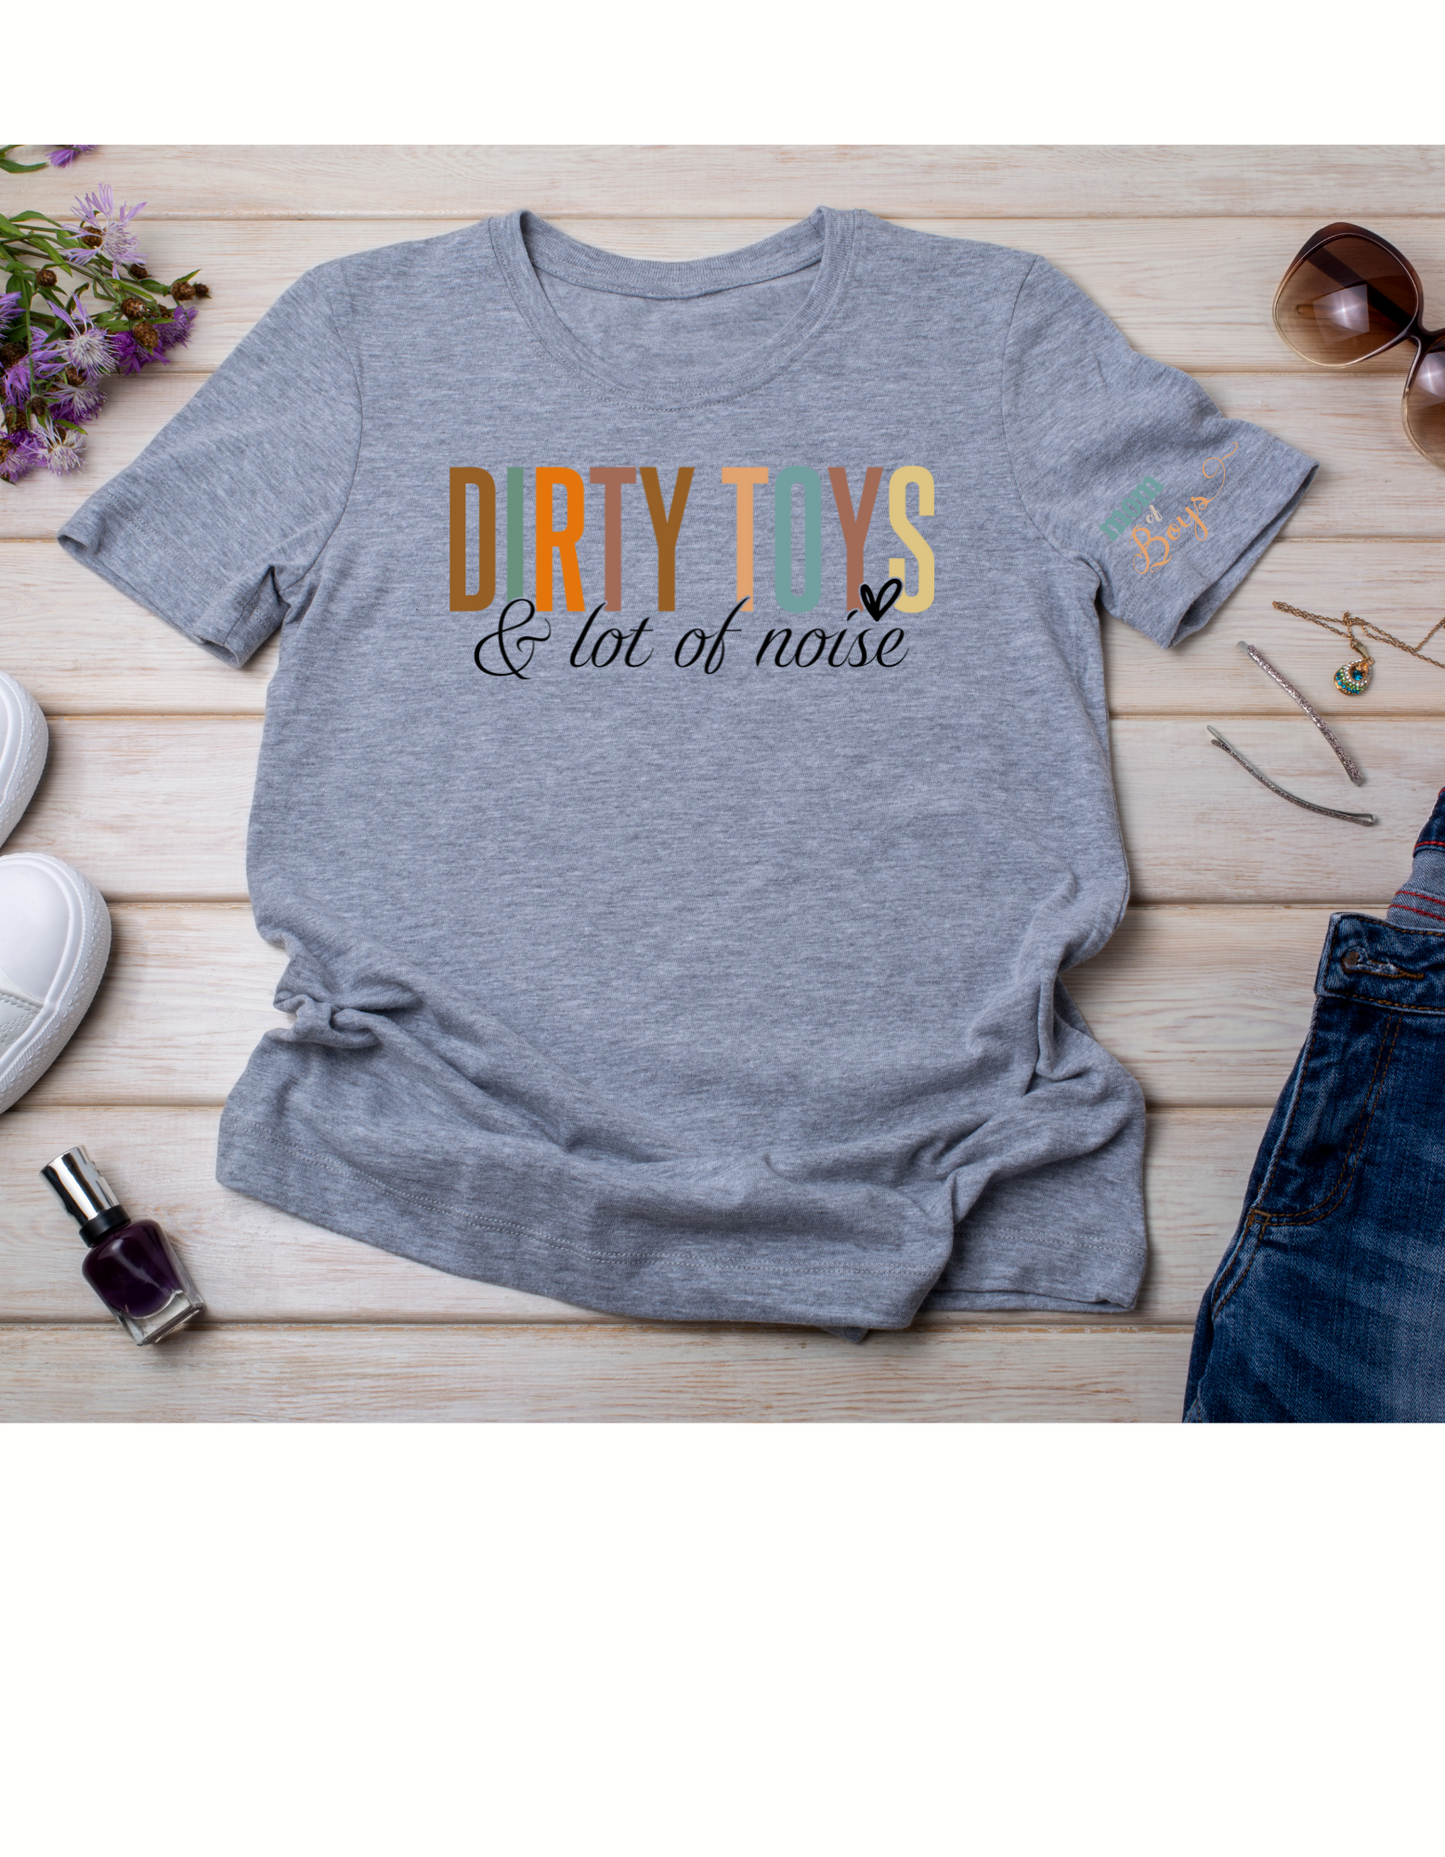 Dirty Toys & Lots of Noise T-shirt, Women's Boy Mom's Shirt